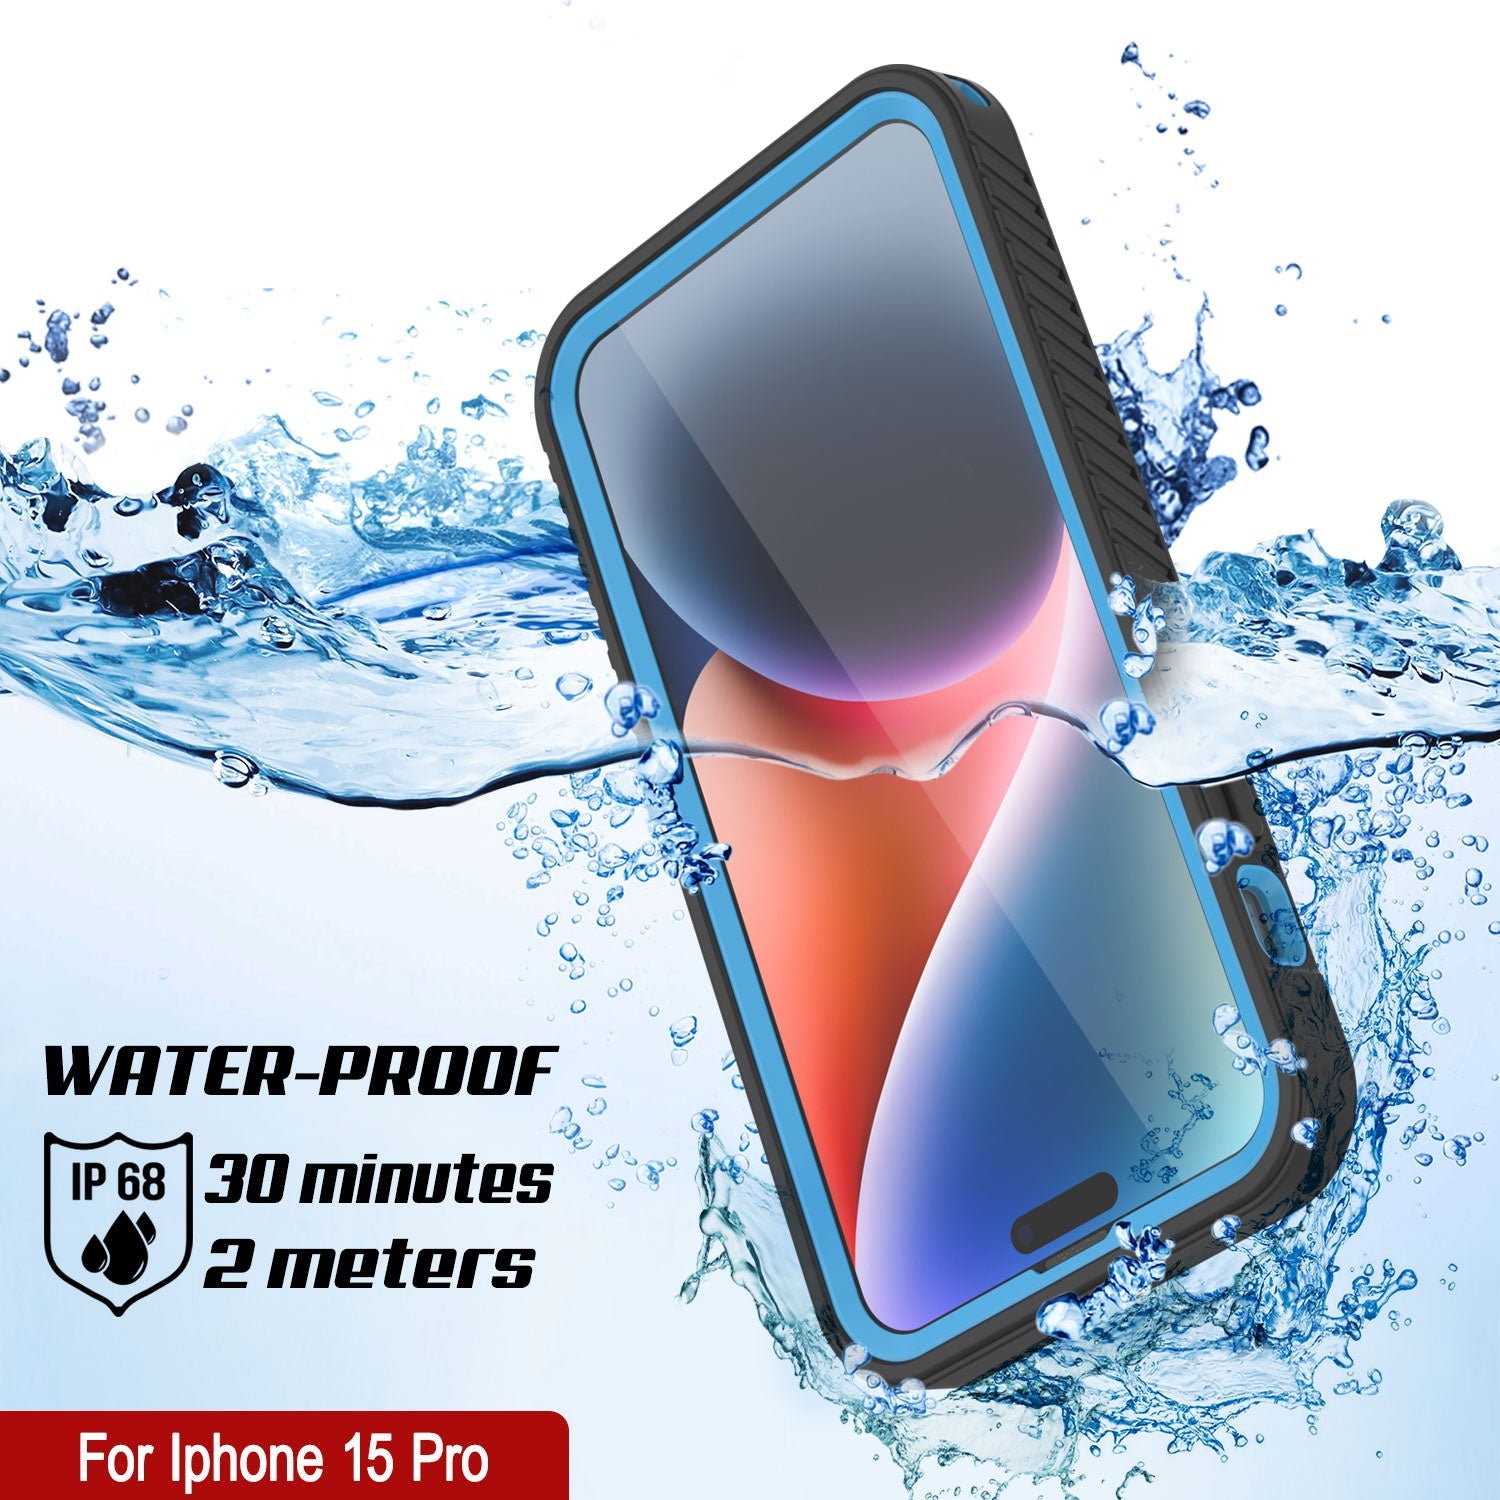 iPhone 15 Pro Waterproof IP68 Case, Punkcase [Light blue] [StudStar Series] [Slim Fit] [Dirtproof]